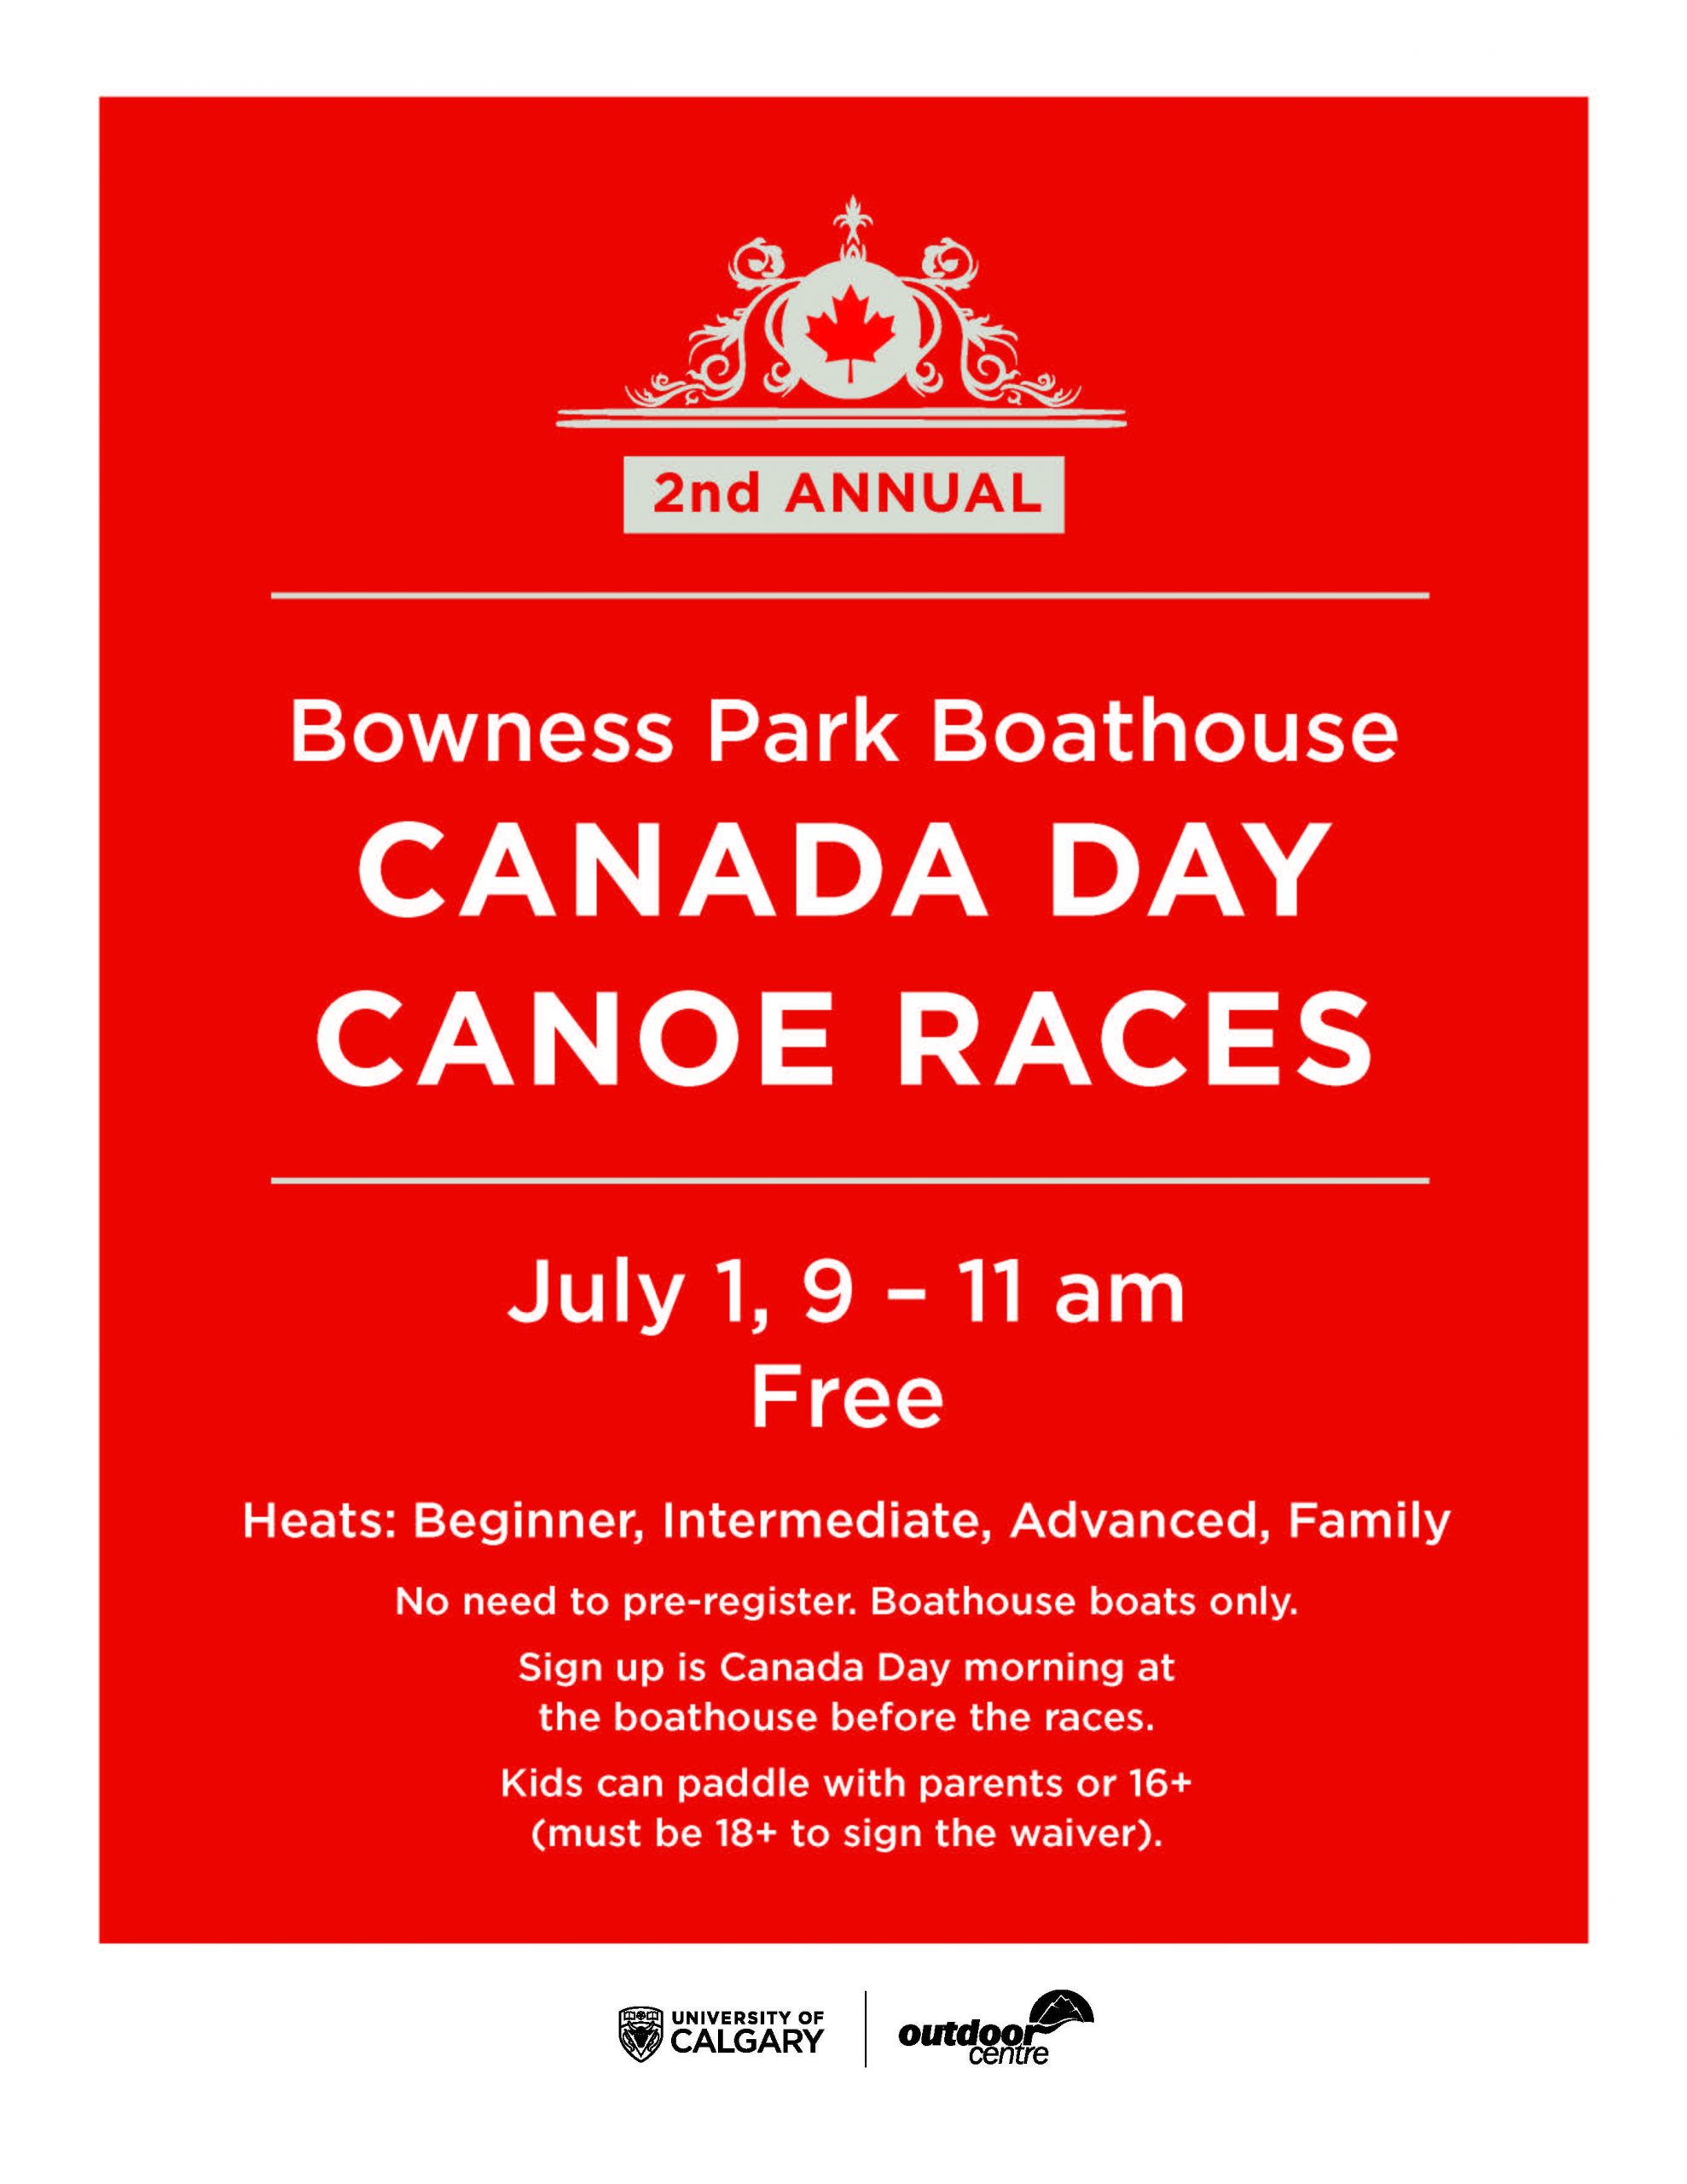 Canada Day Canoe Races (Family Fun Calgary)